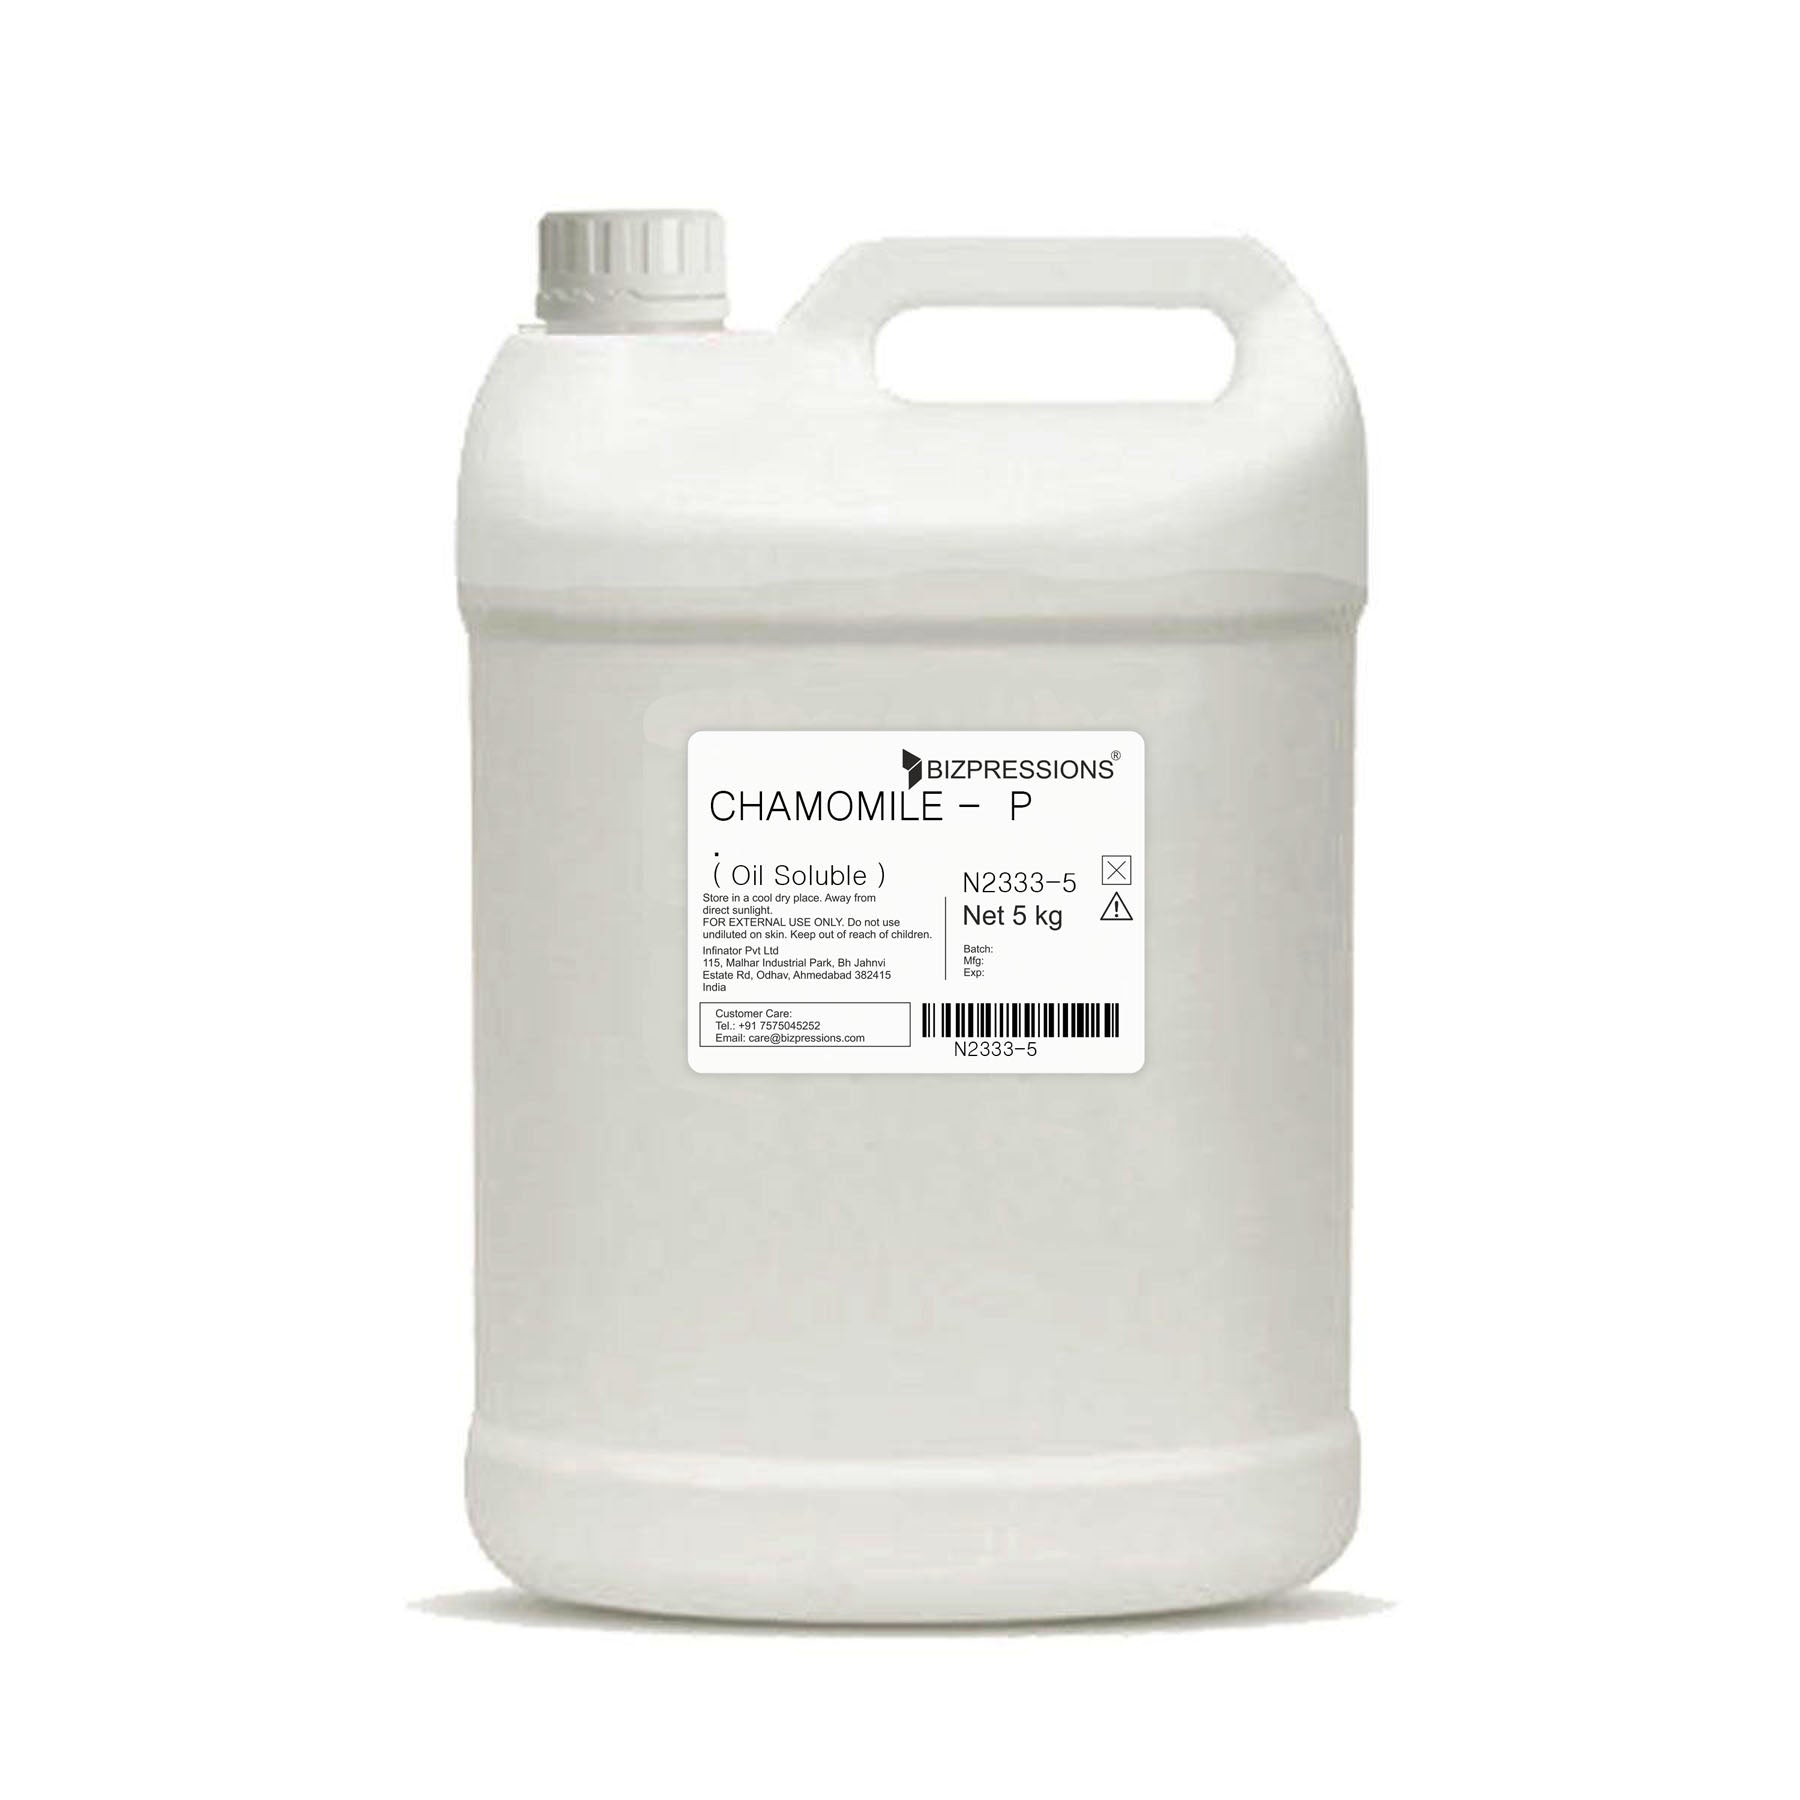 CHAMOMILE - P - Fragrance ( Oil Soluble ) - 5 kg